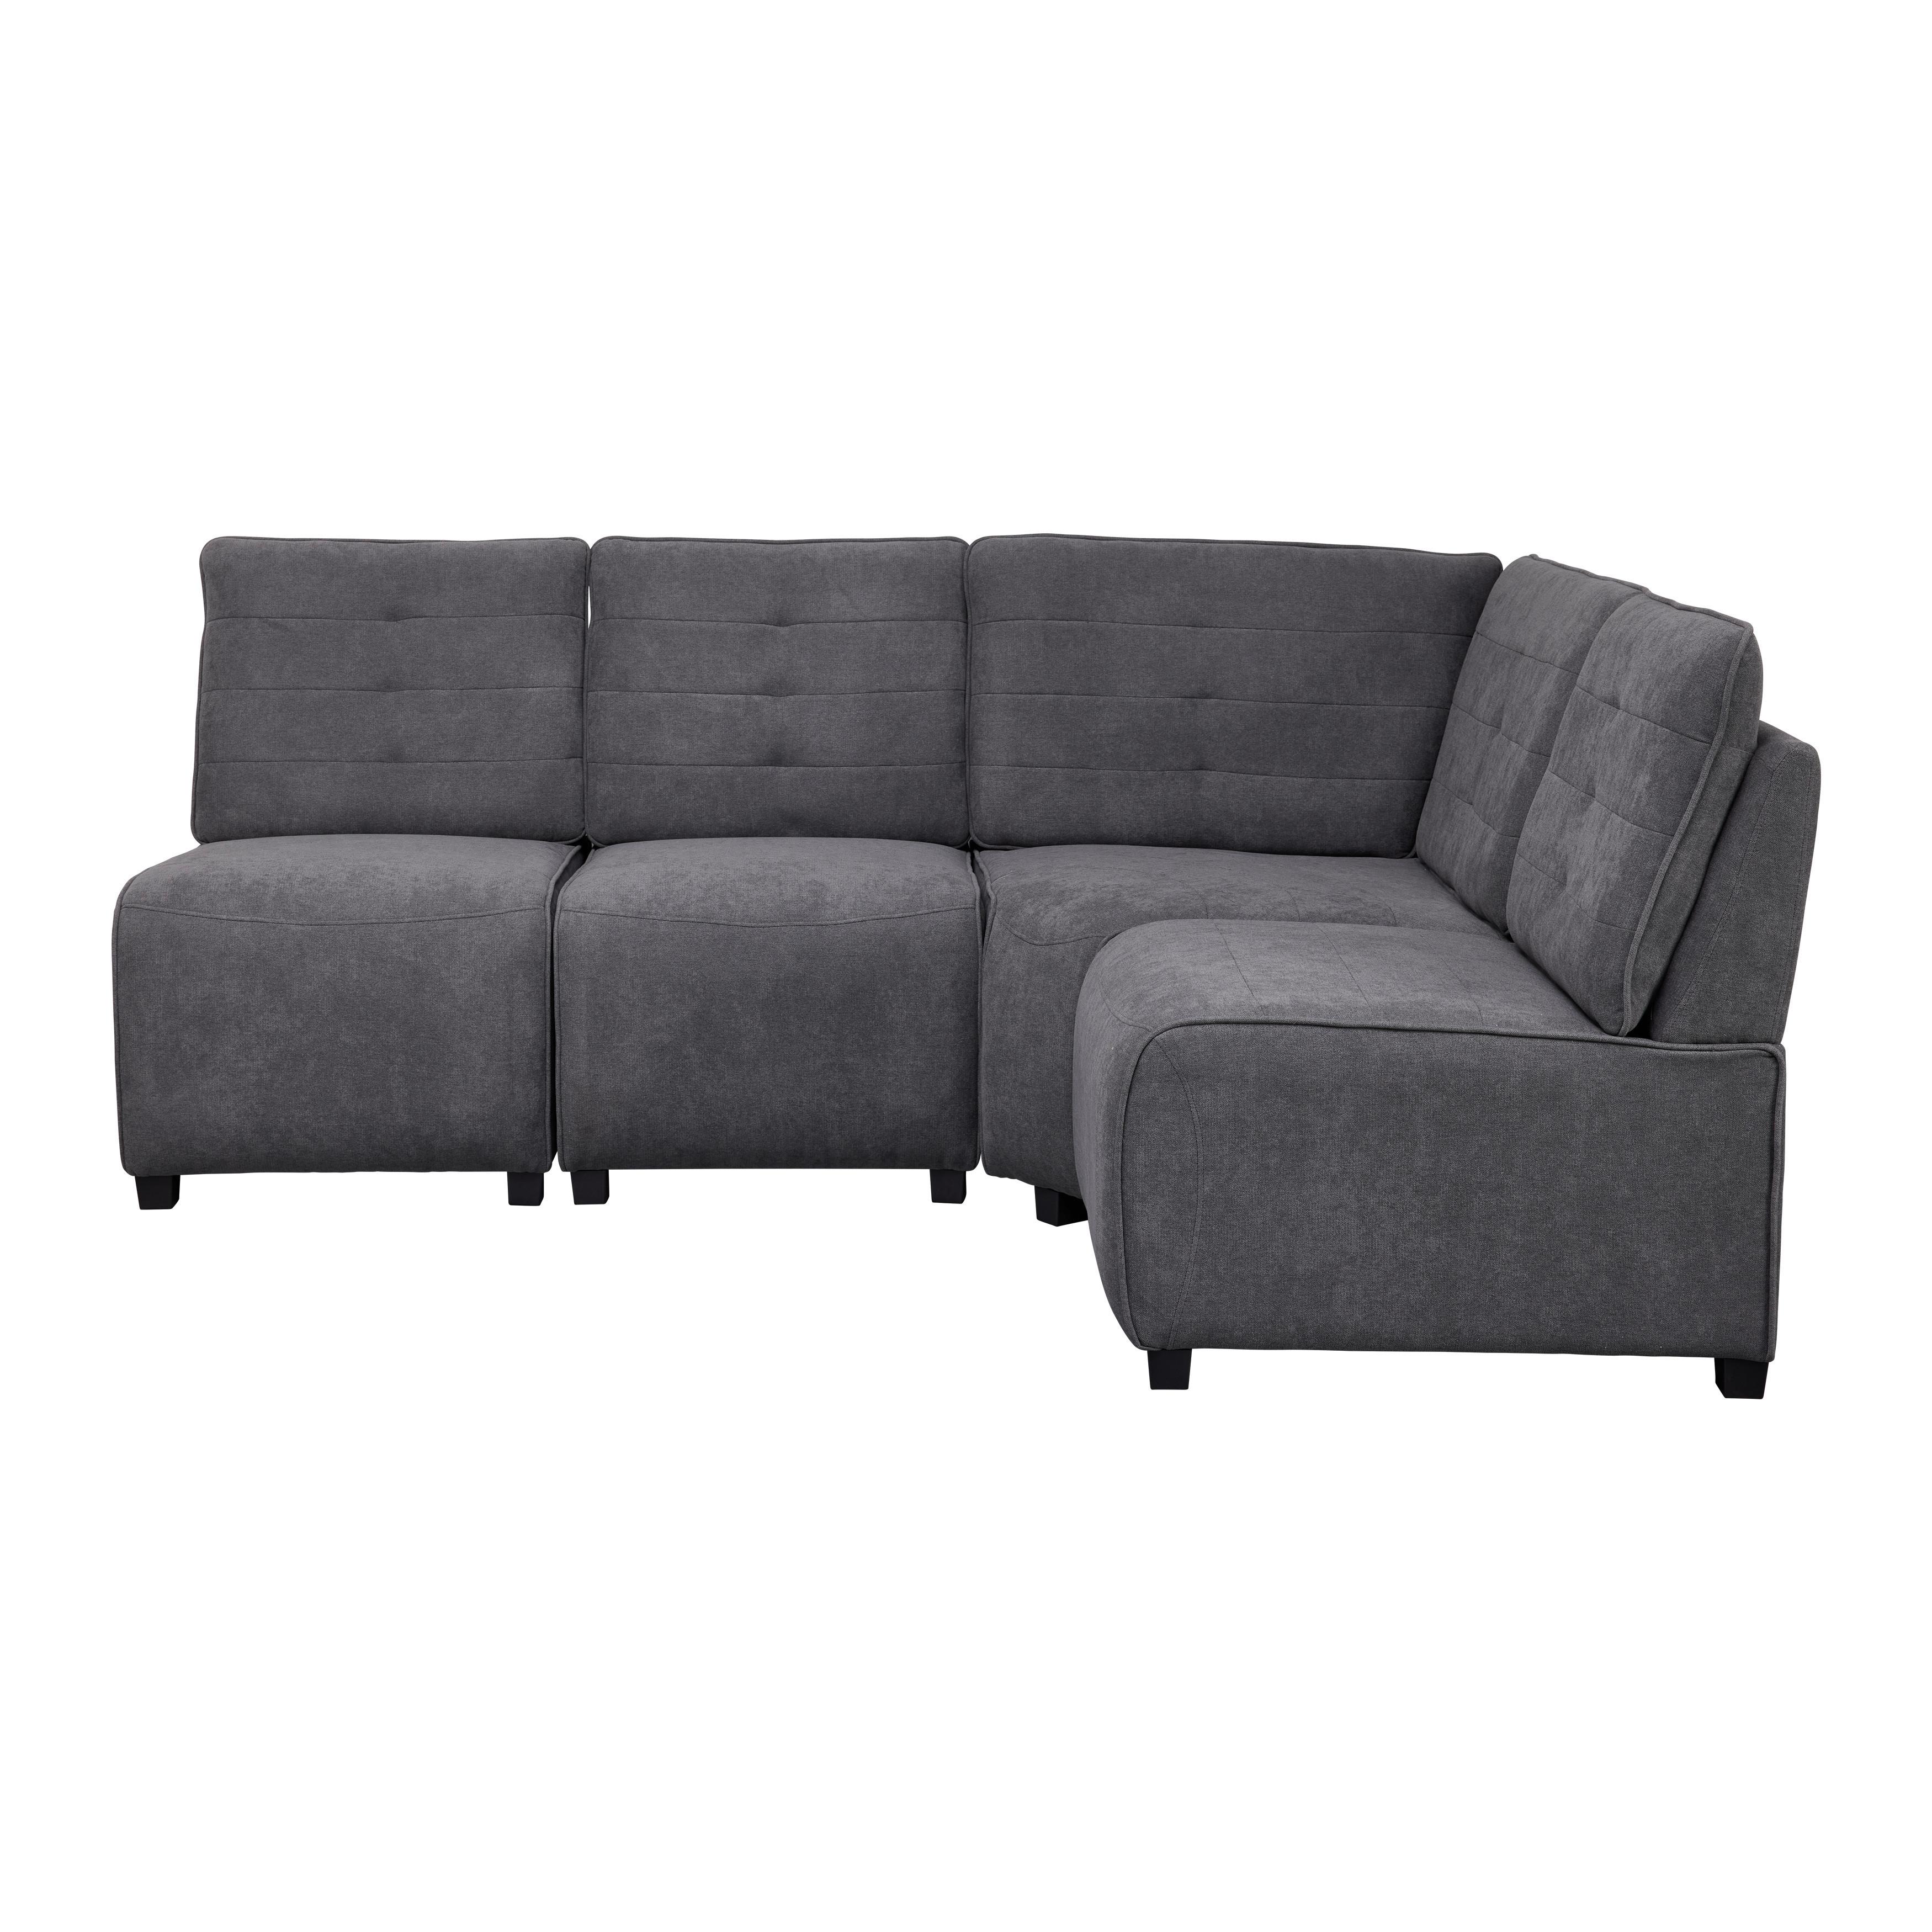 Sedežna Garnitura Victoire - temno siva/črna, Moderno, umetna masa/tekstil (215/90/94cm) - Bessagi Home